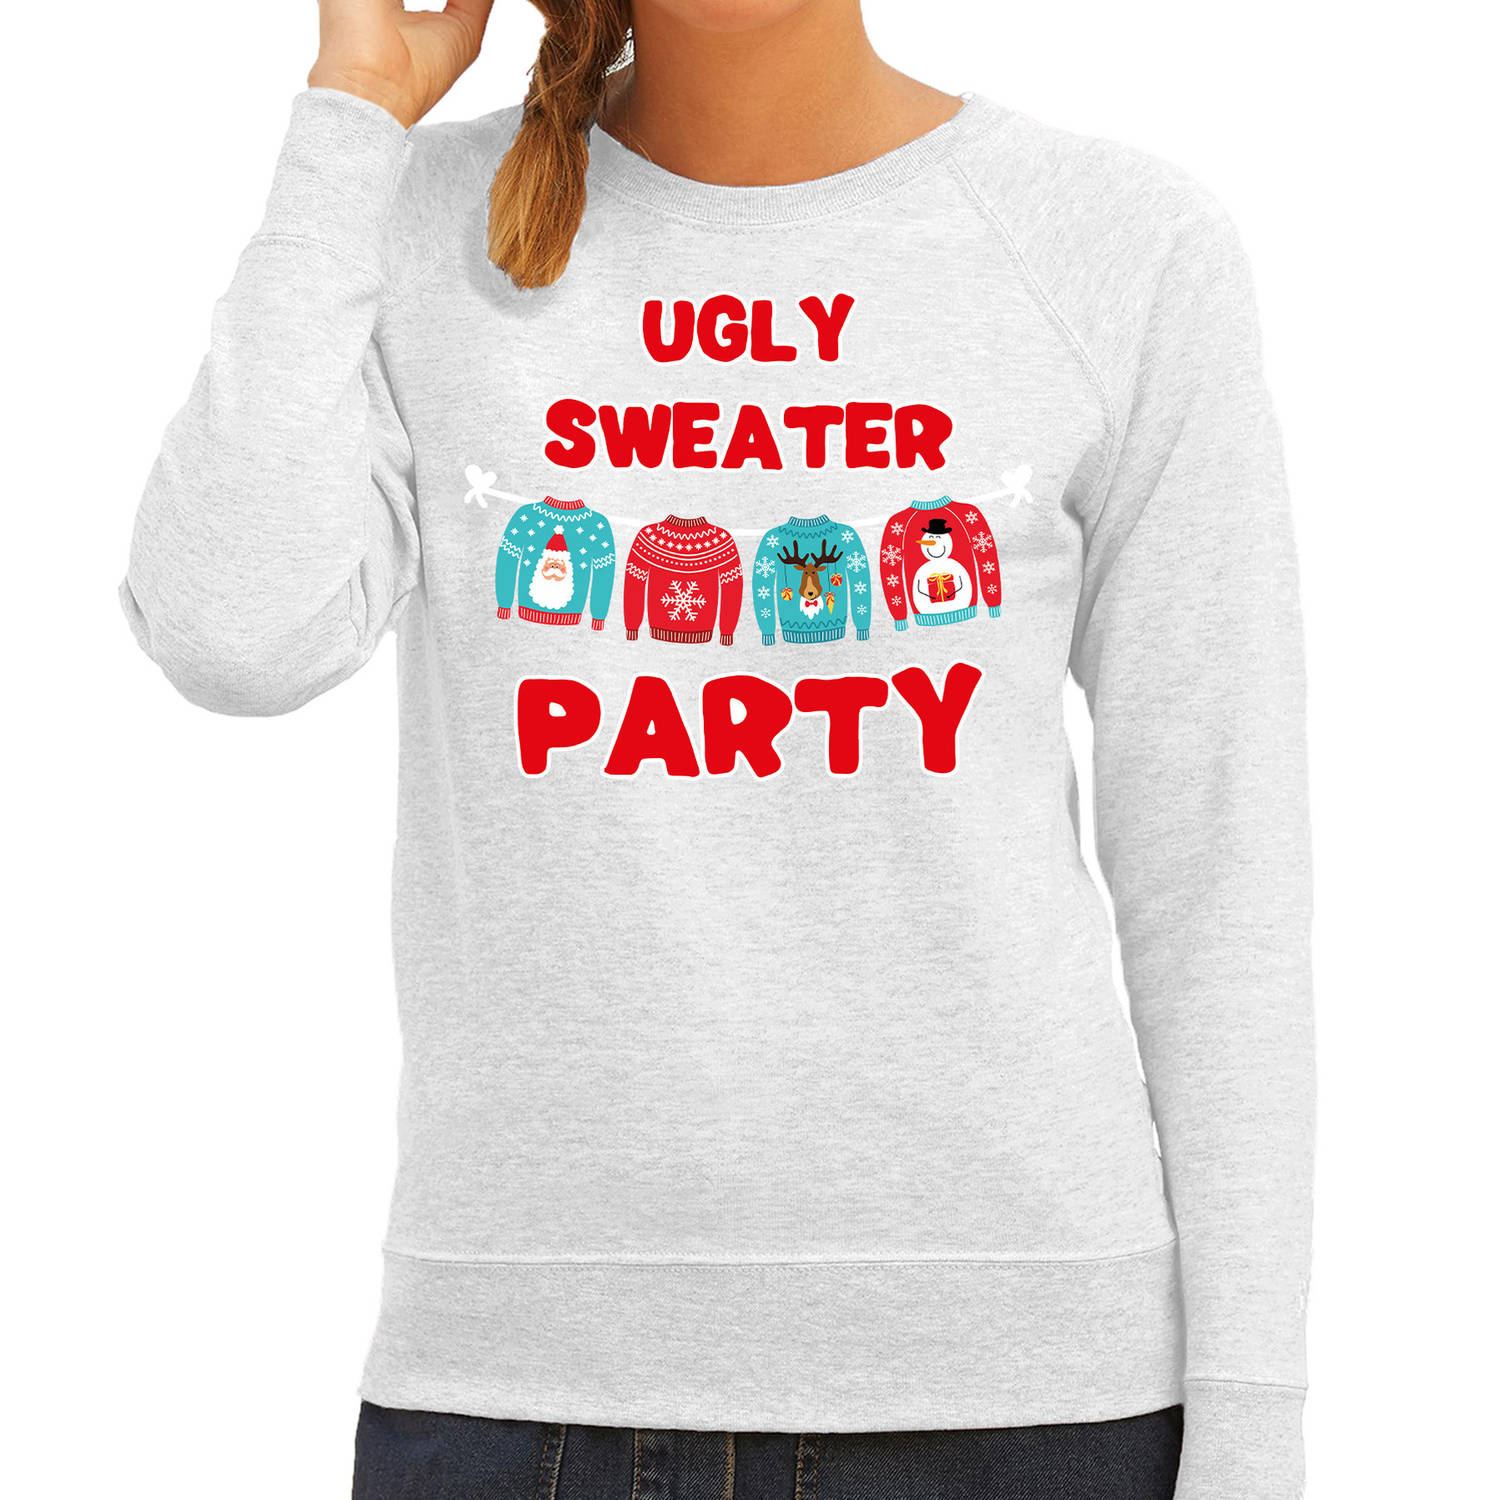 Grijze Kersttrui / Kerstkleding Ugly sweater party voor dames 2XL - kerst truien